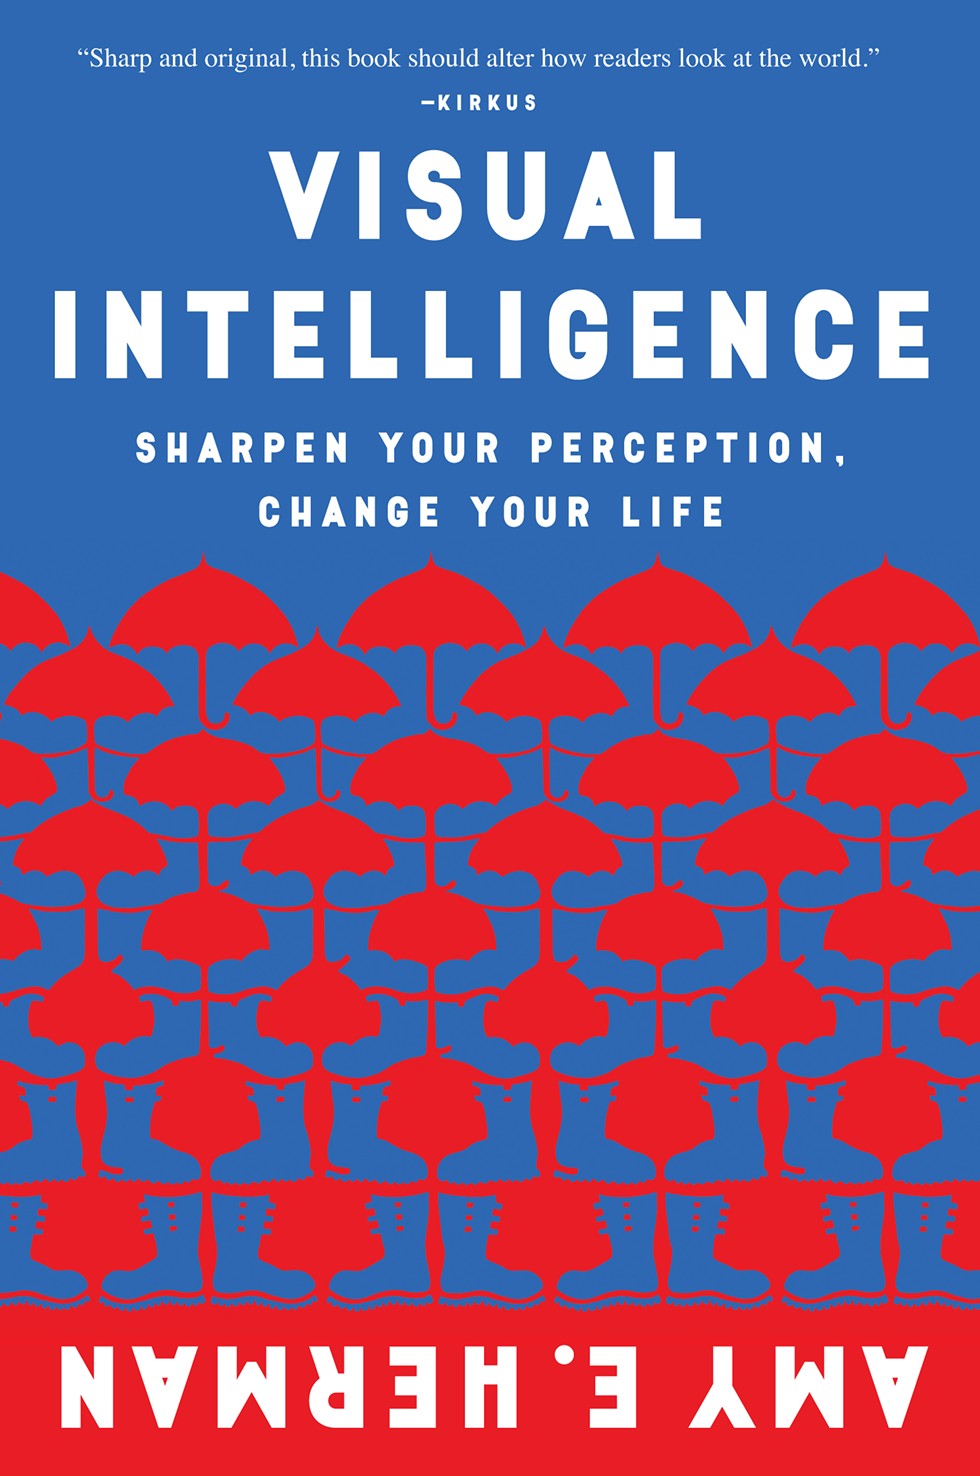 visual-intelligence-book-cover.jpg